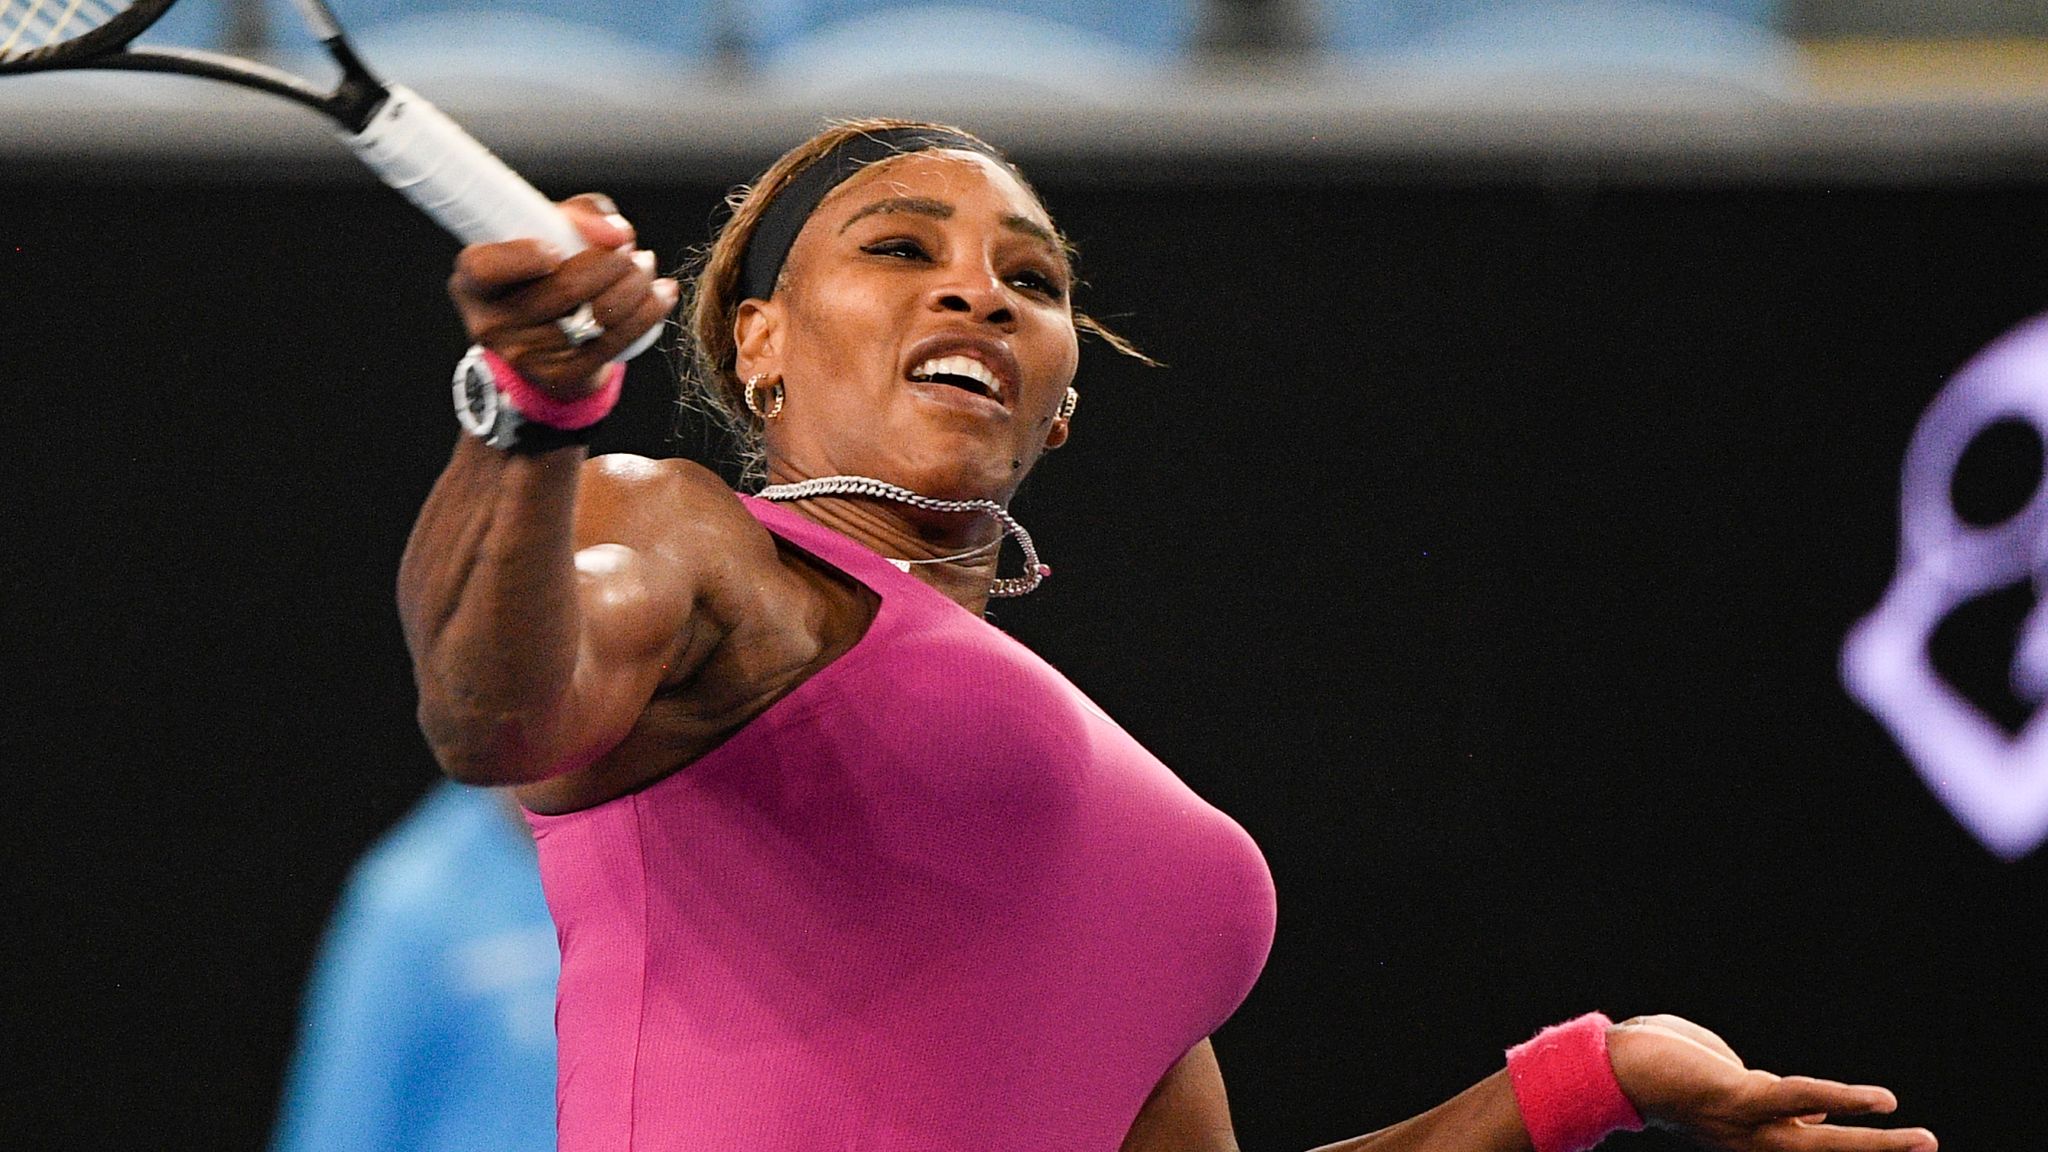 Australian Open: Serena Williams 'relaxed' ahead of tournament despite  shoulder injury | Tennis News | Sky Sports